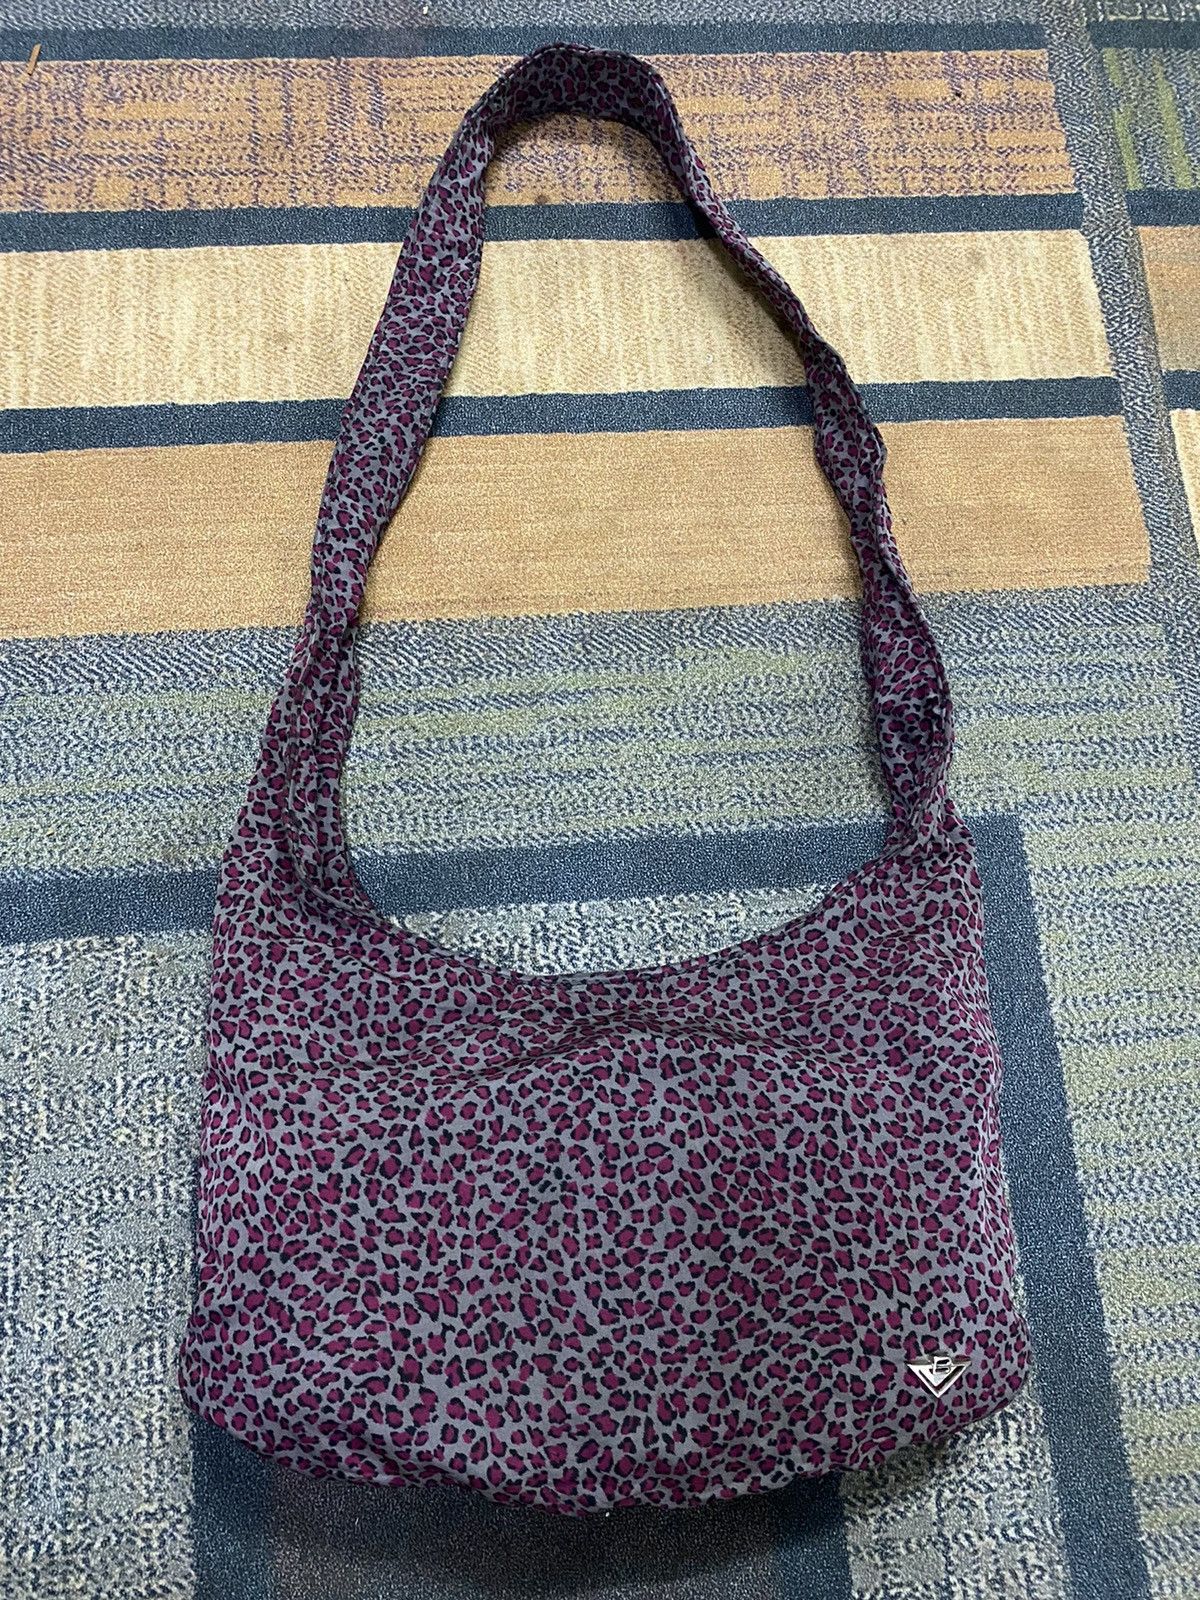 Authentic Bottega Venet Leopard Print Shoulder Bag - 19